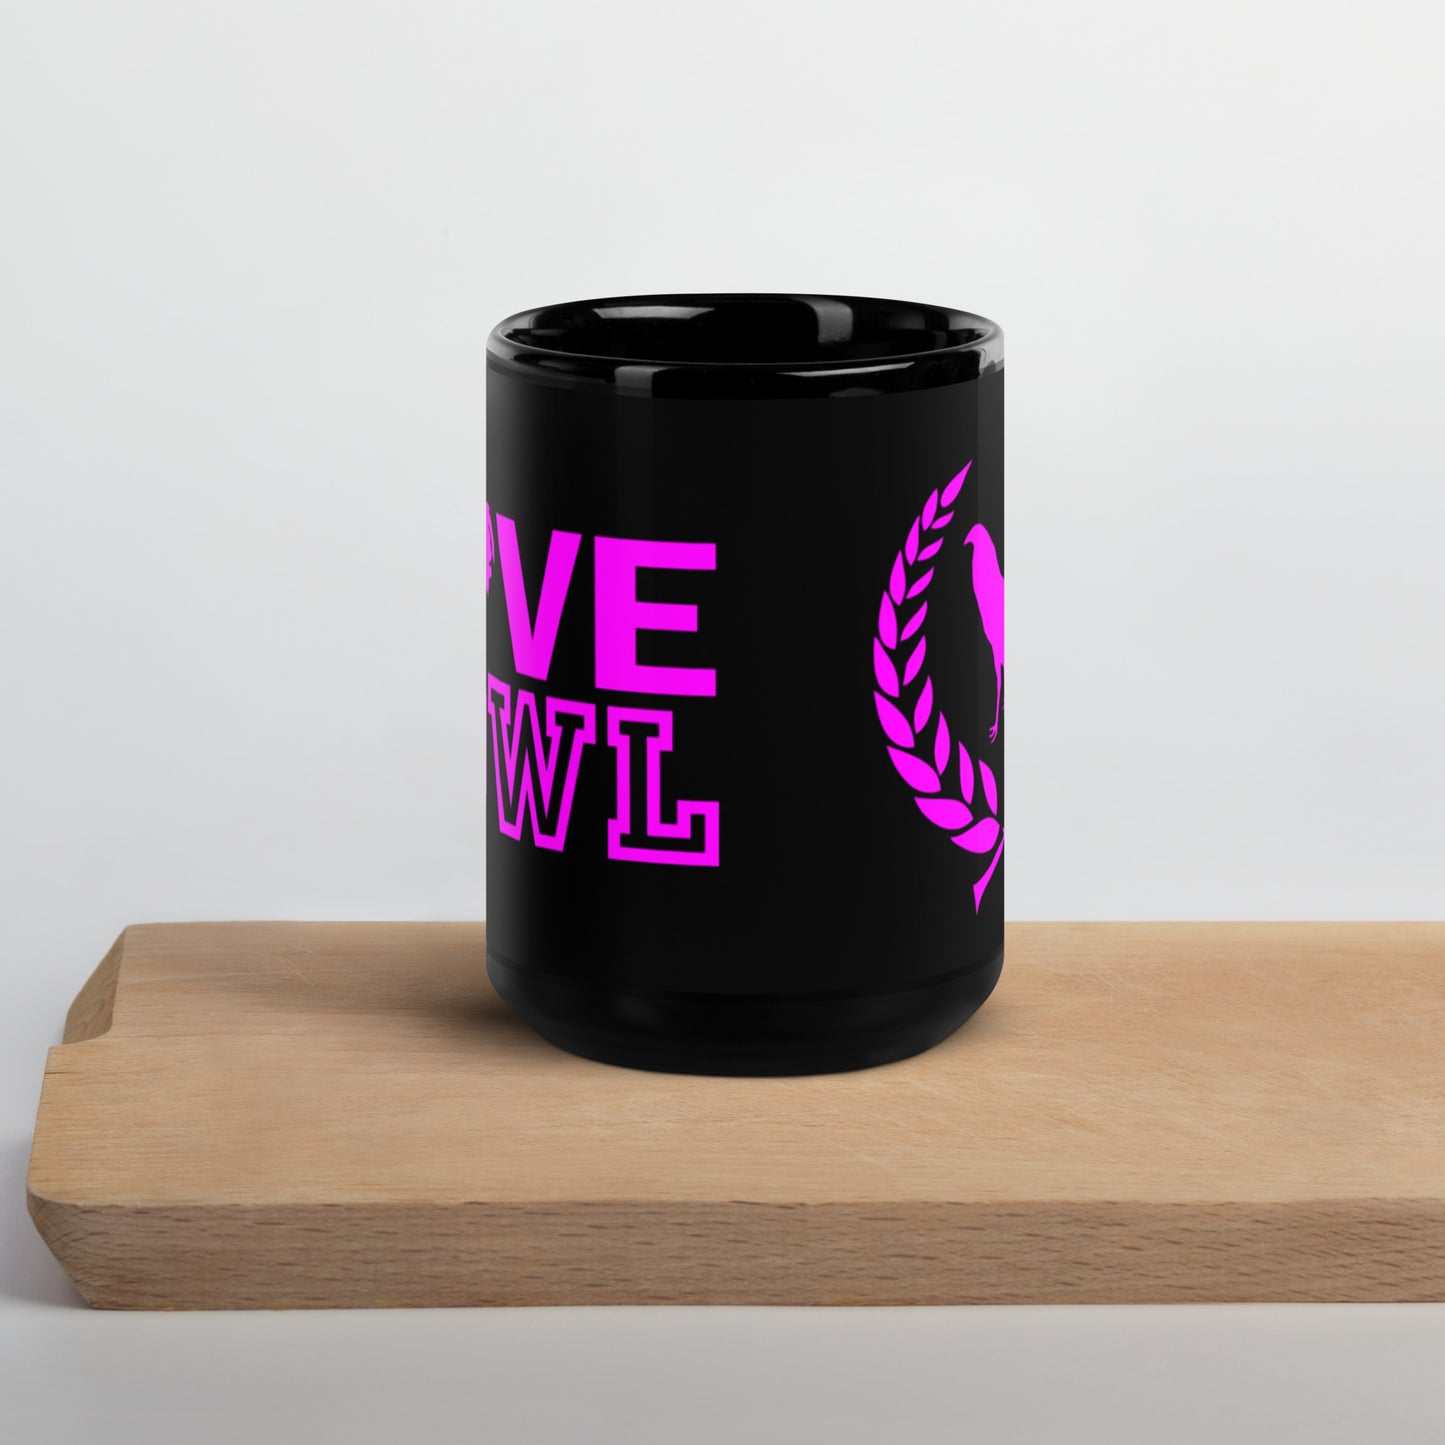 PINK VS LOVE FOWL LEAF Gamefowl Rooster Black Glossy Mug